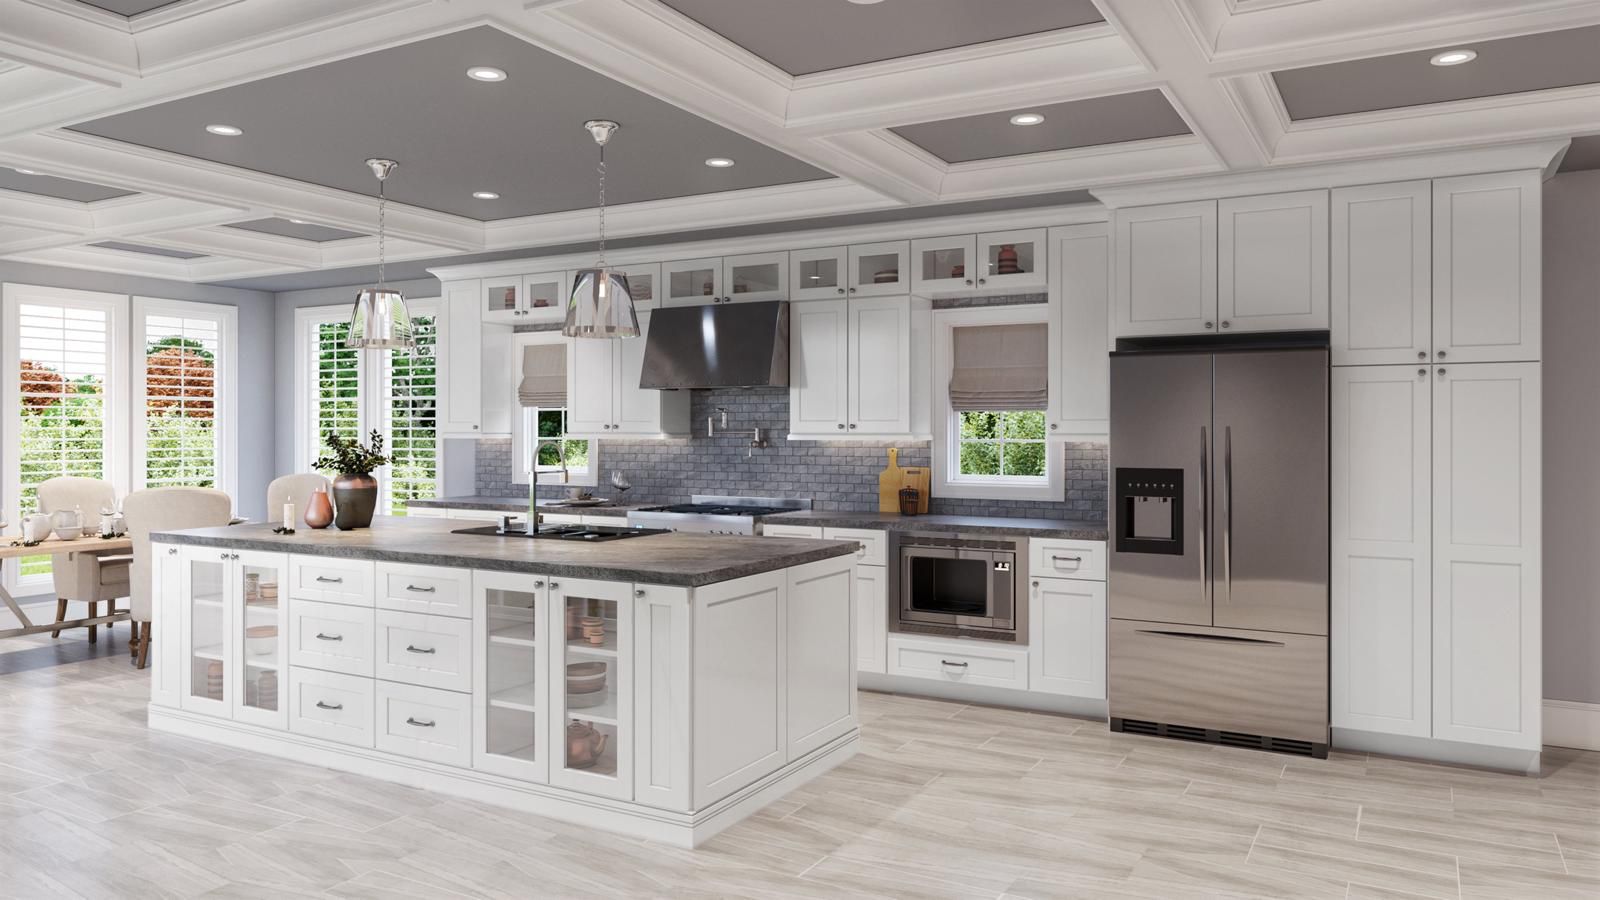 Custom-designed kitchen cabinets